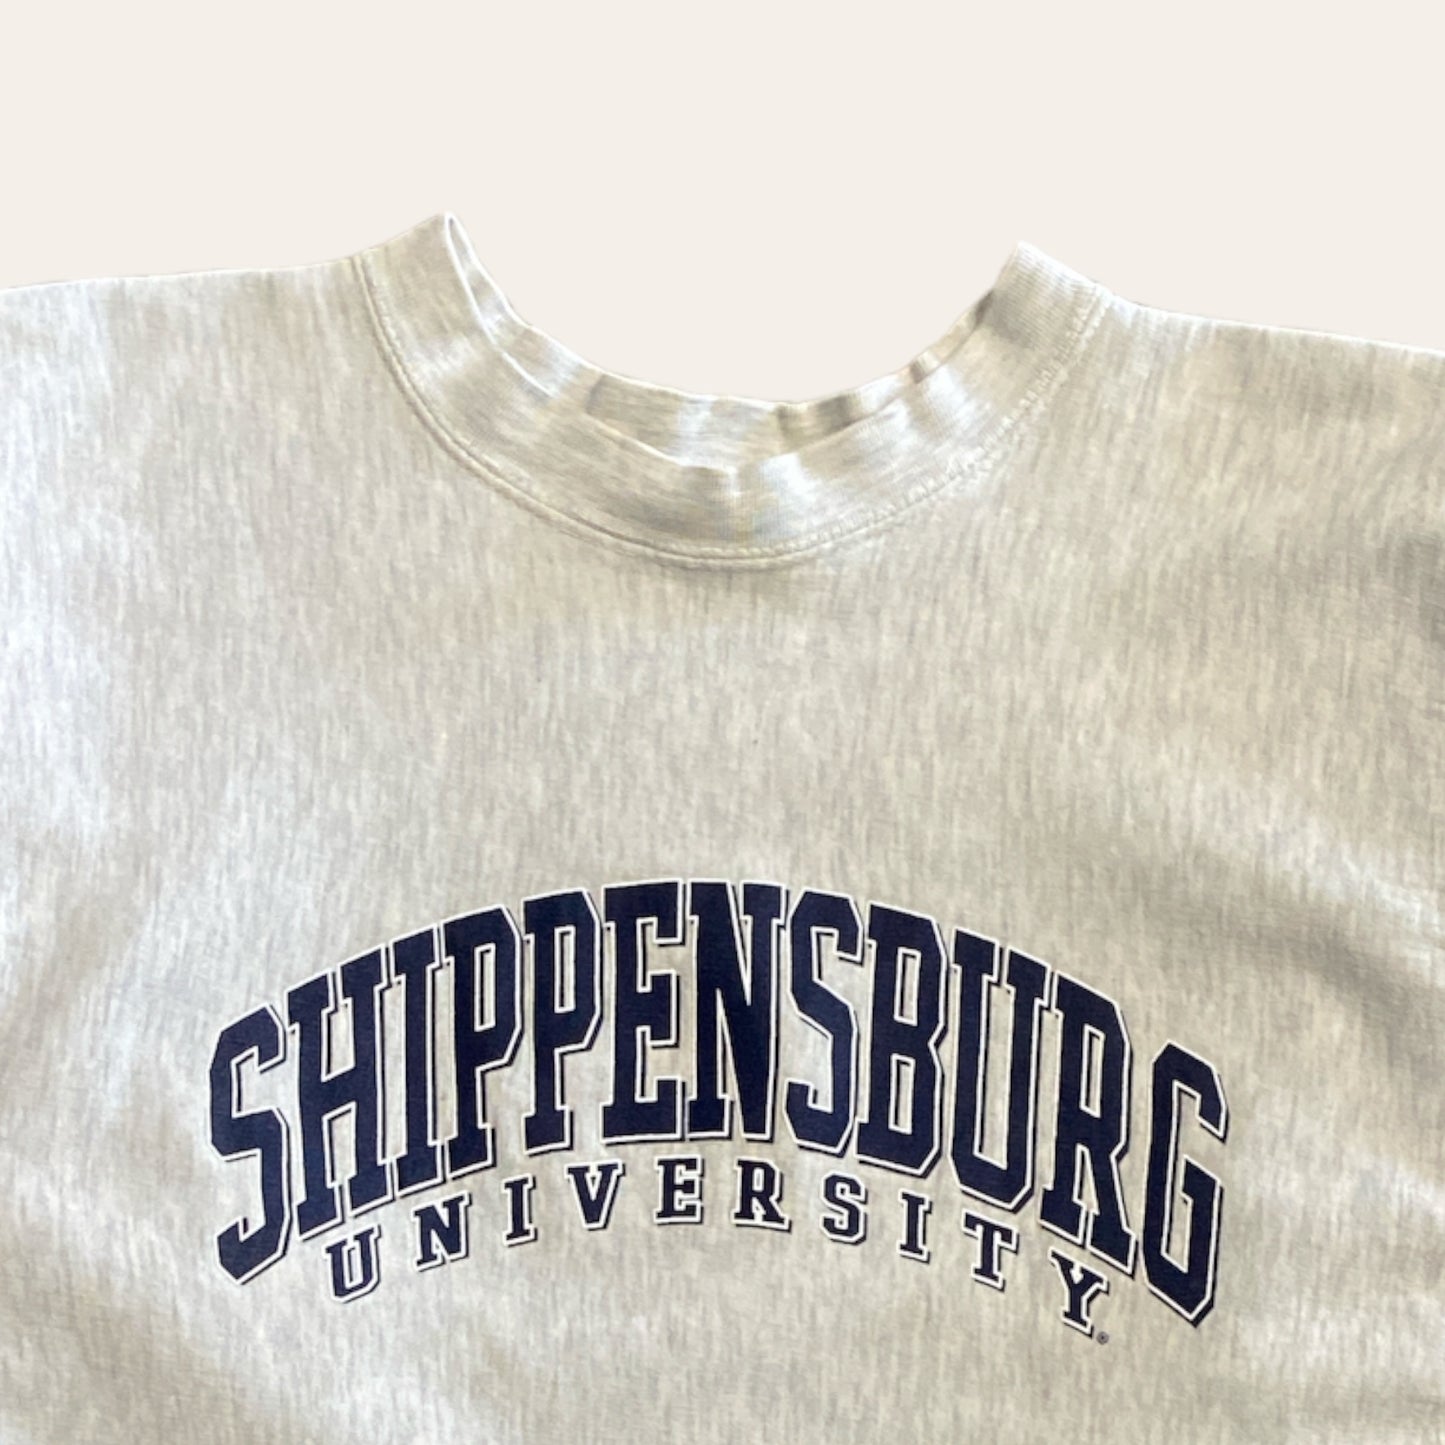 Vintage Shippensburg University Sweater